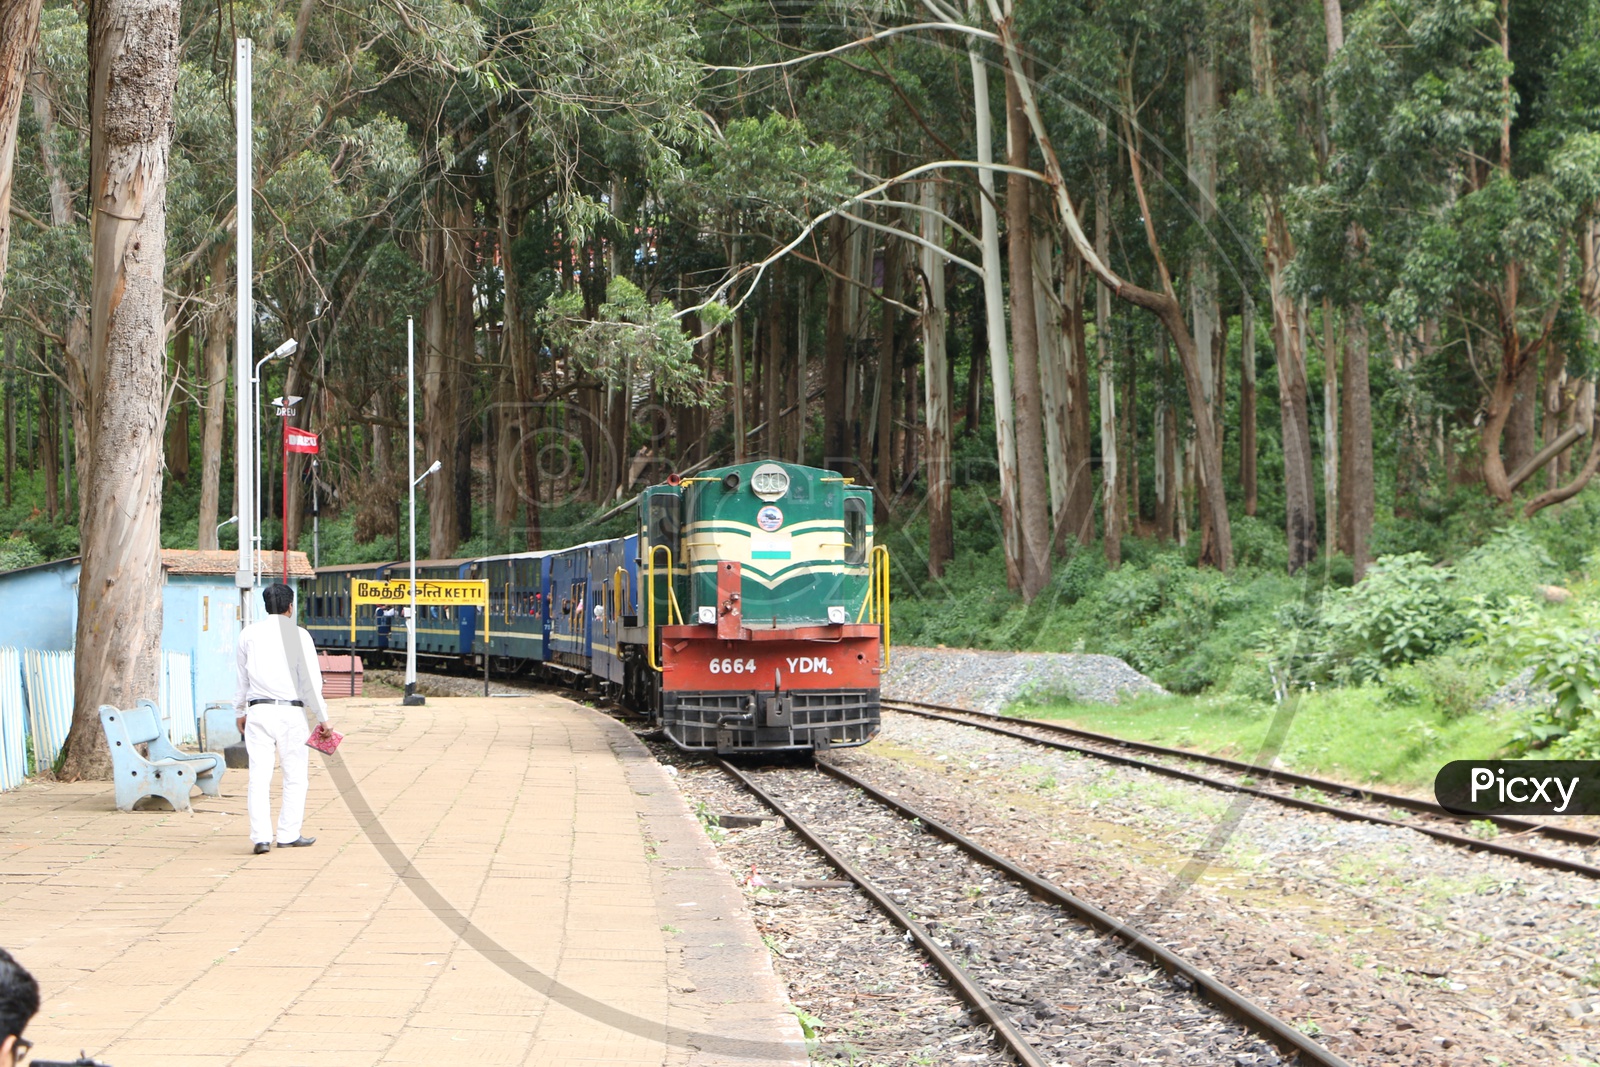 Train arriving at a Station in Ooty , Nilgiri Mountain Railways train